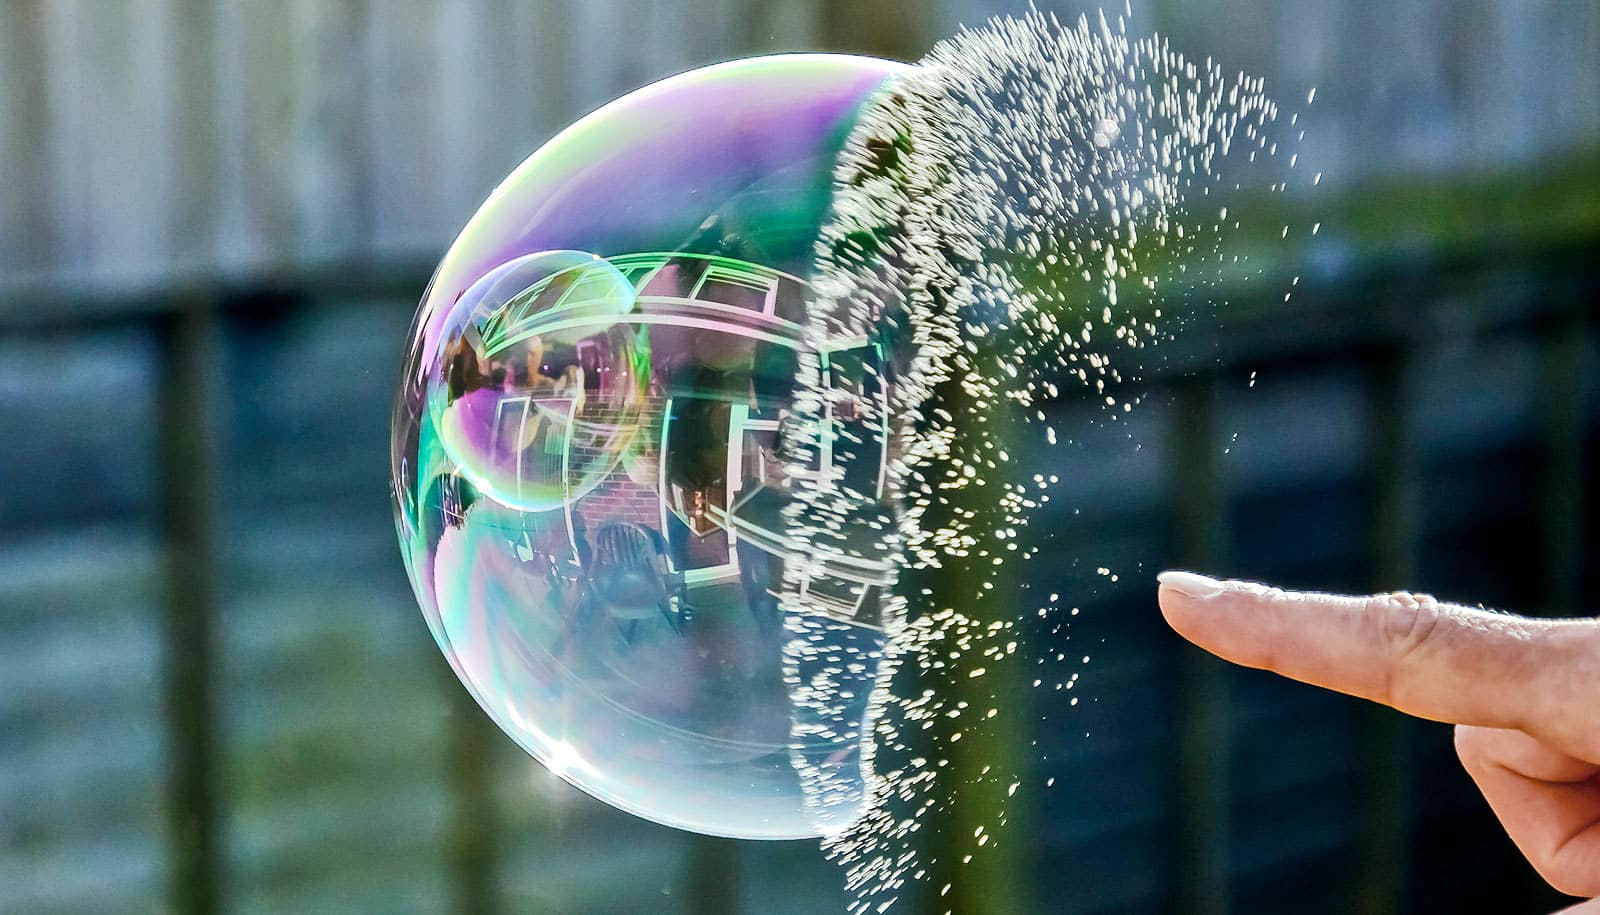 Why do bubbles pop?